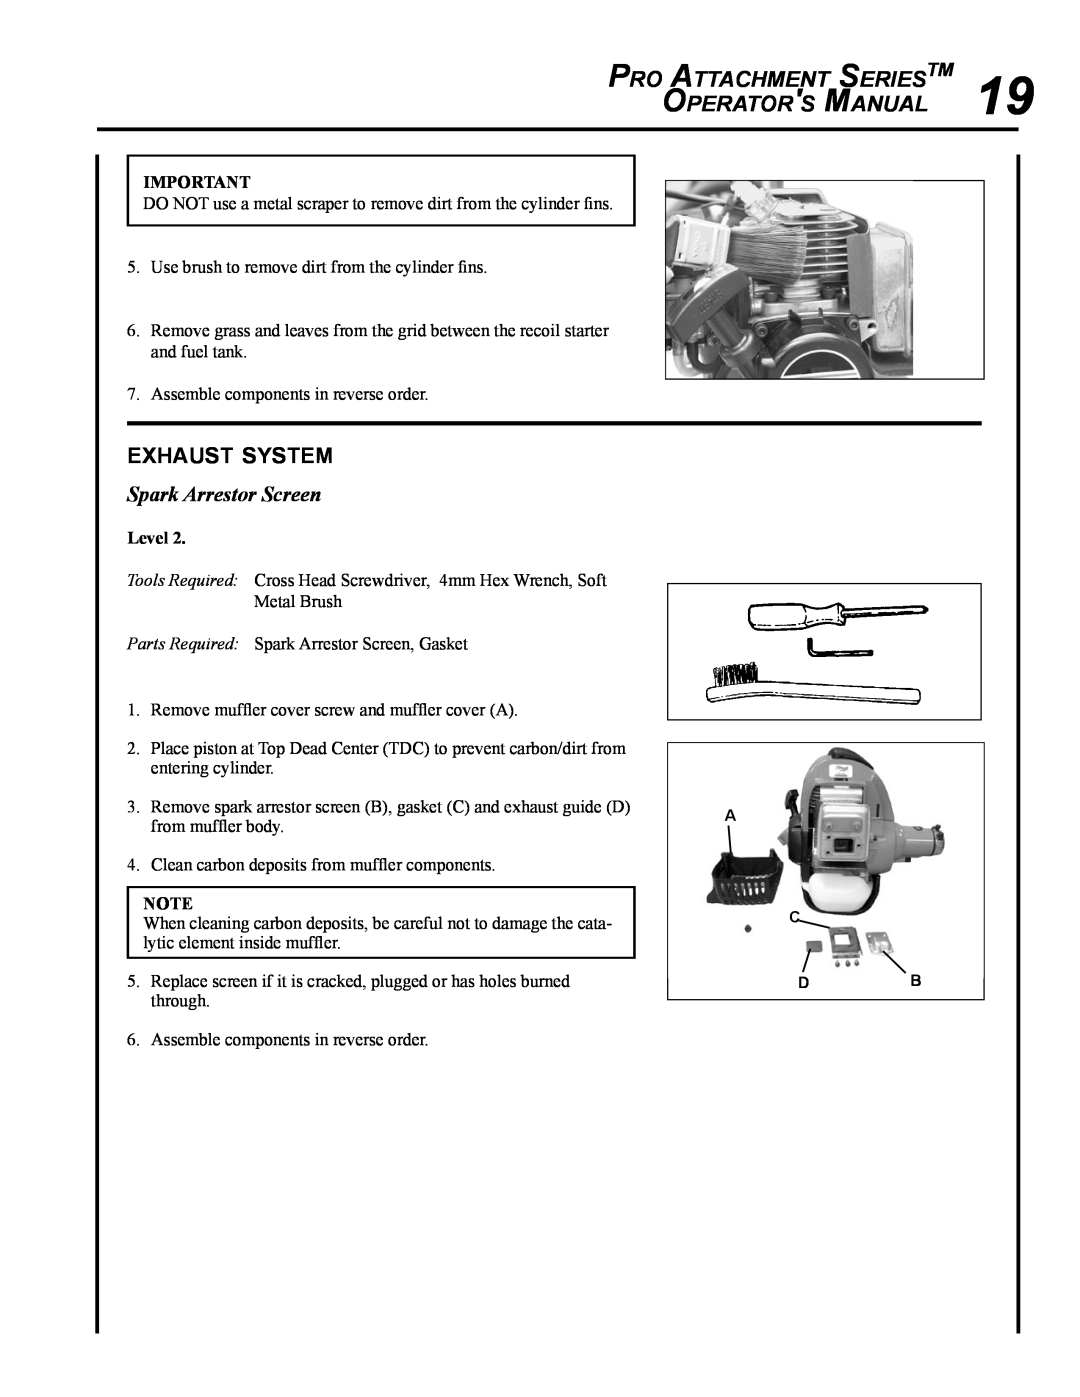 Echo PAS-265 manual exhaust system, Spark Arrestor Screen, Pro Attachment SeriesTM Operators Manual 